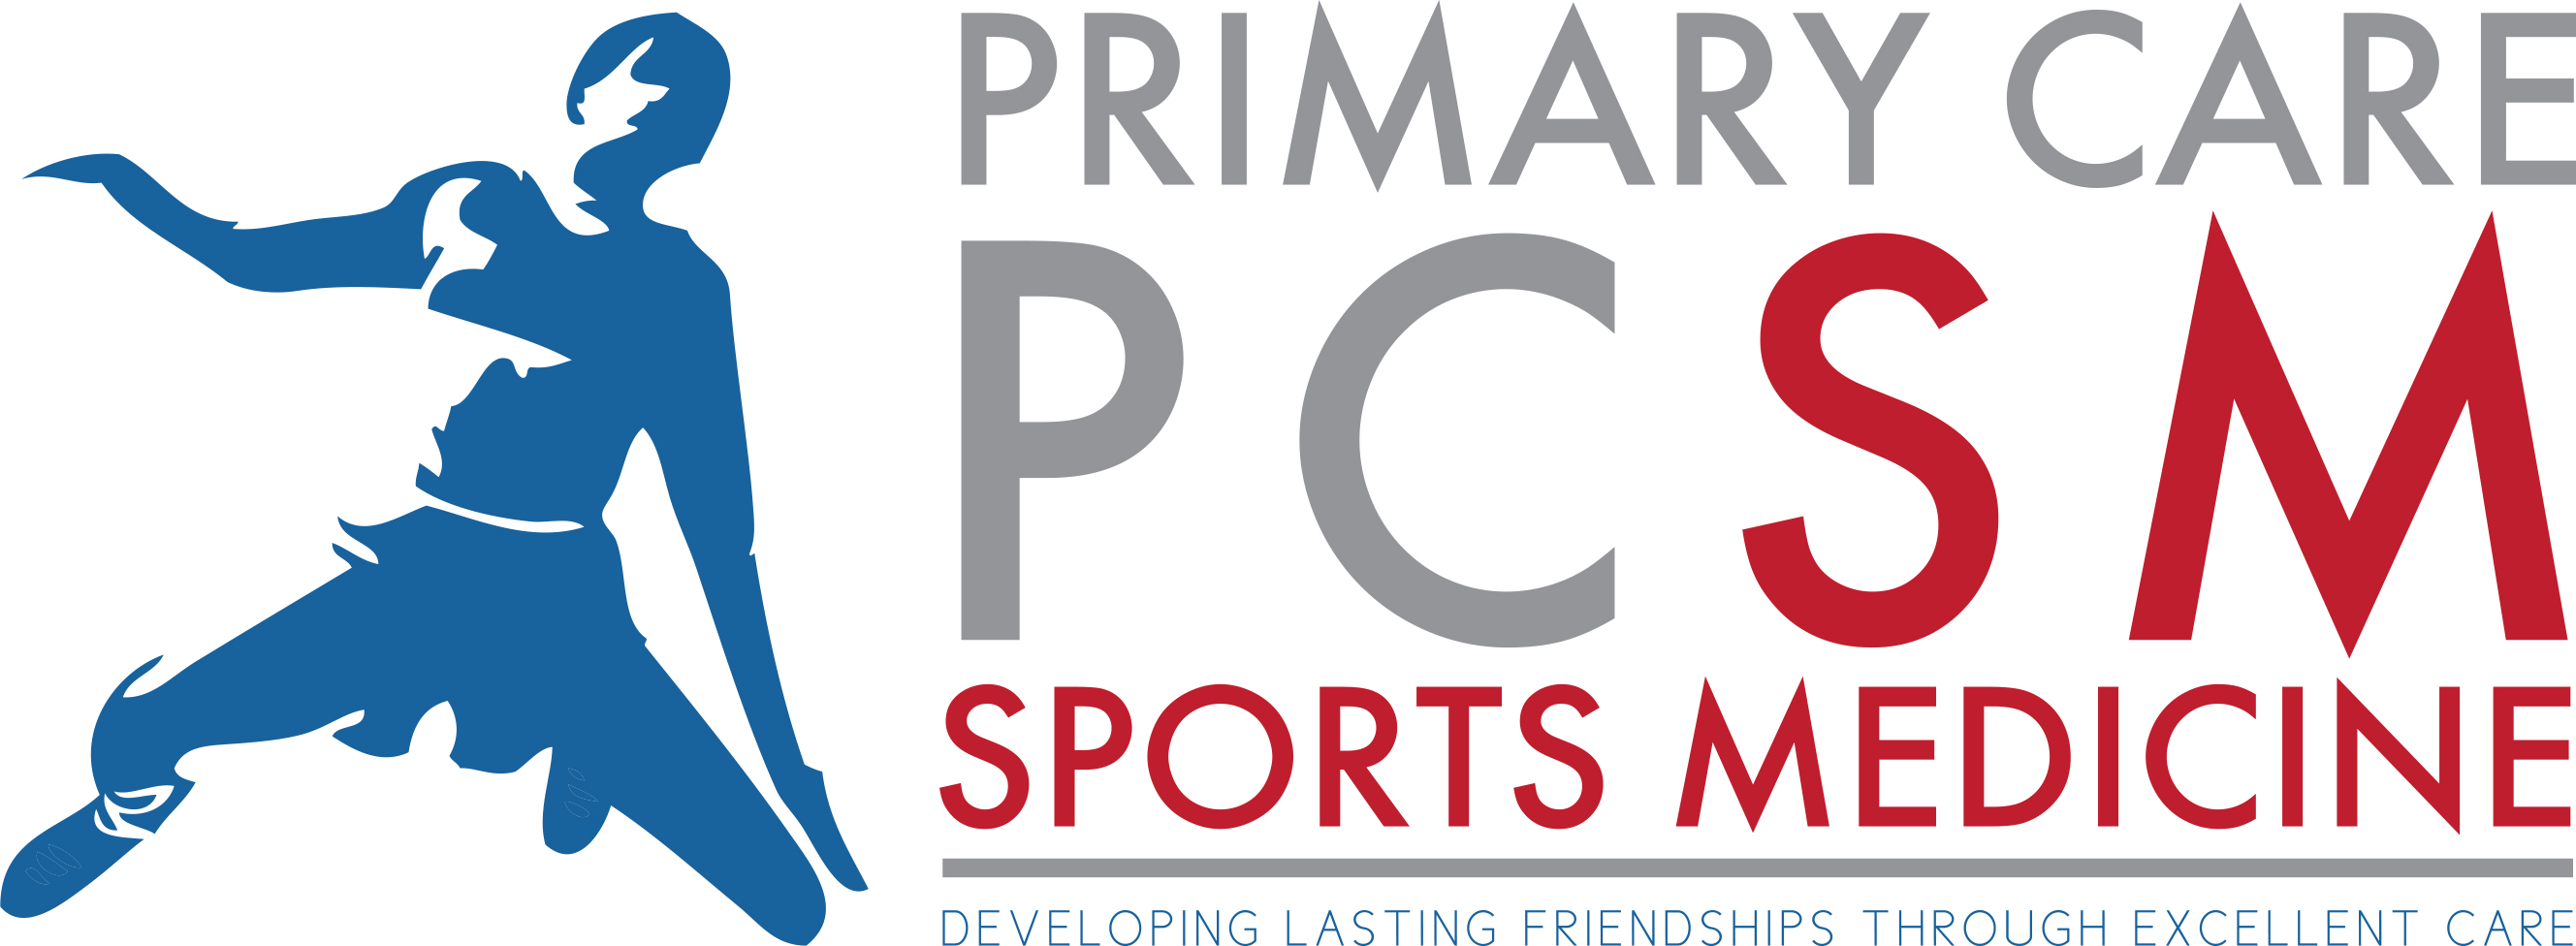 Primary Care Sports Medicine 